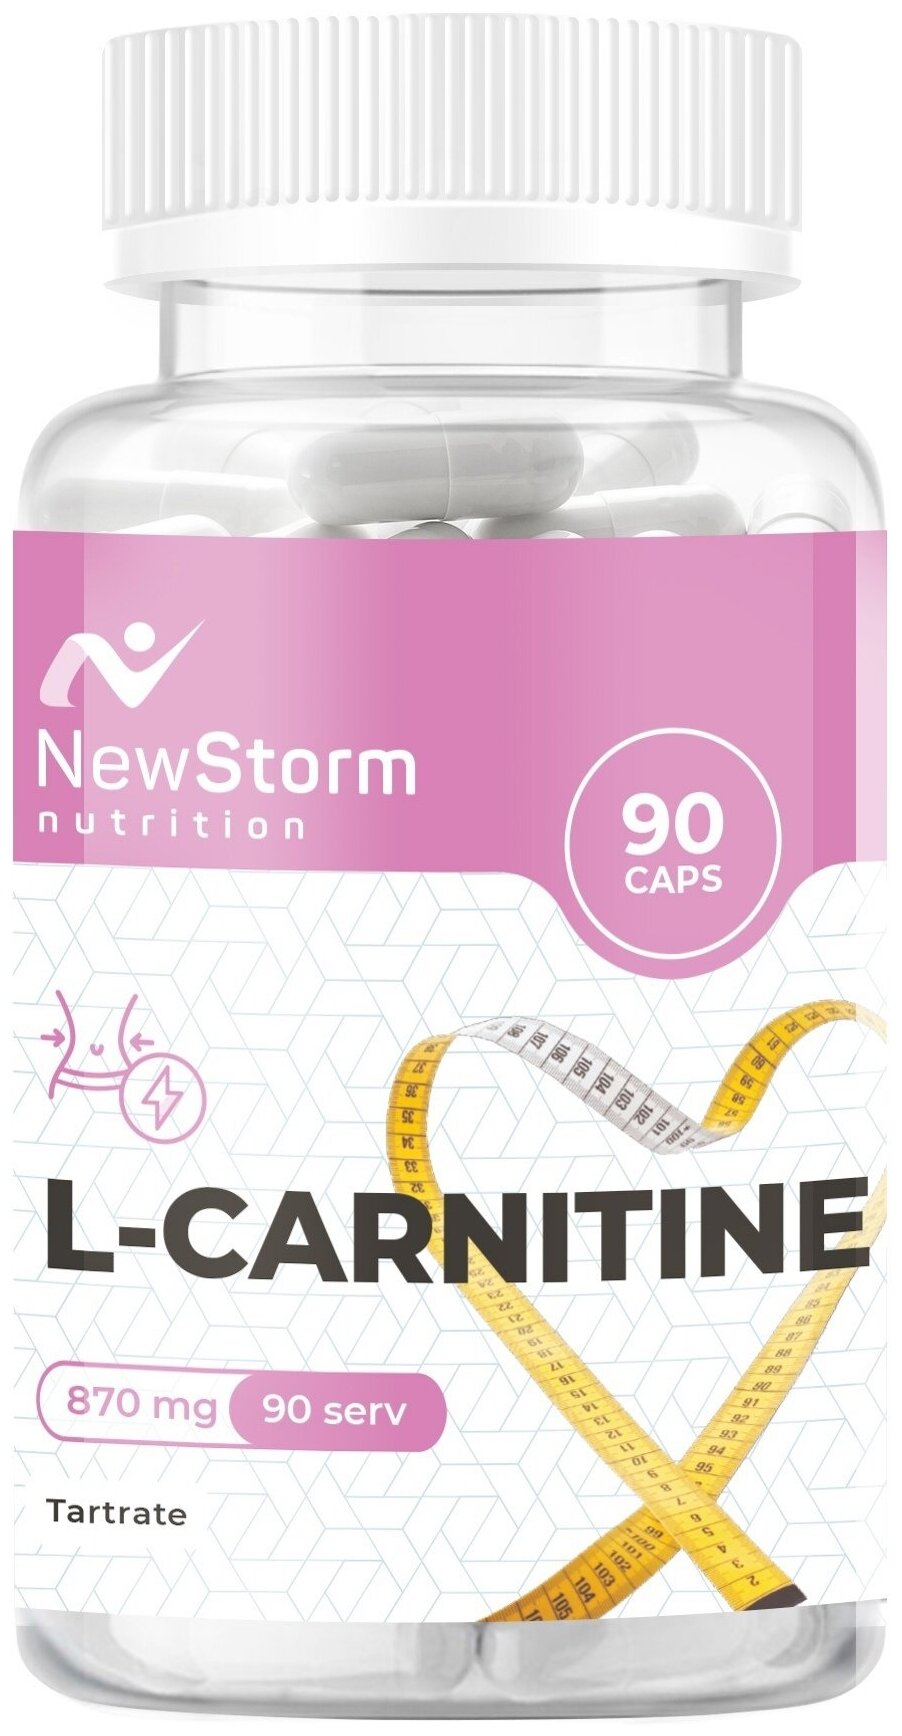 NewStorm L-Carnitine 90 caps Нейтральный